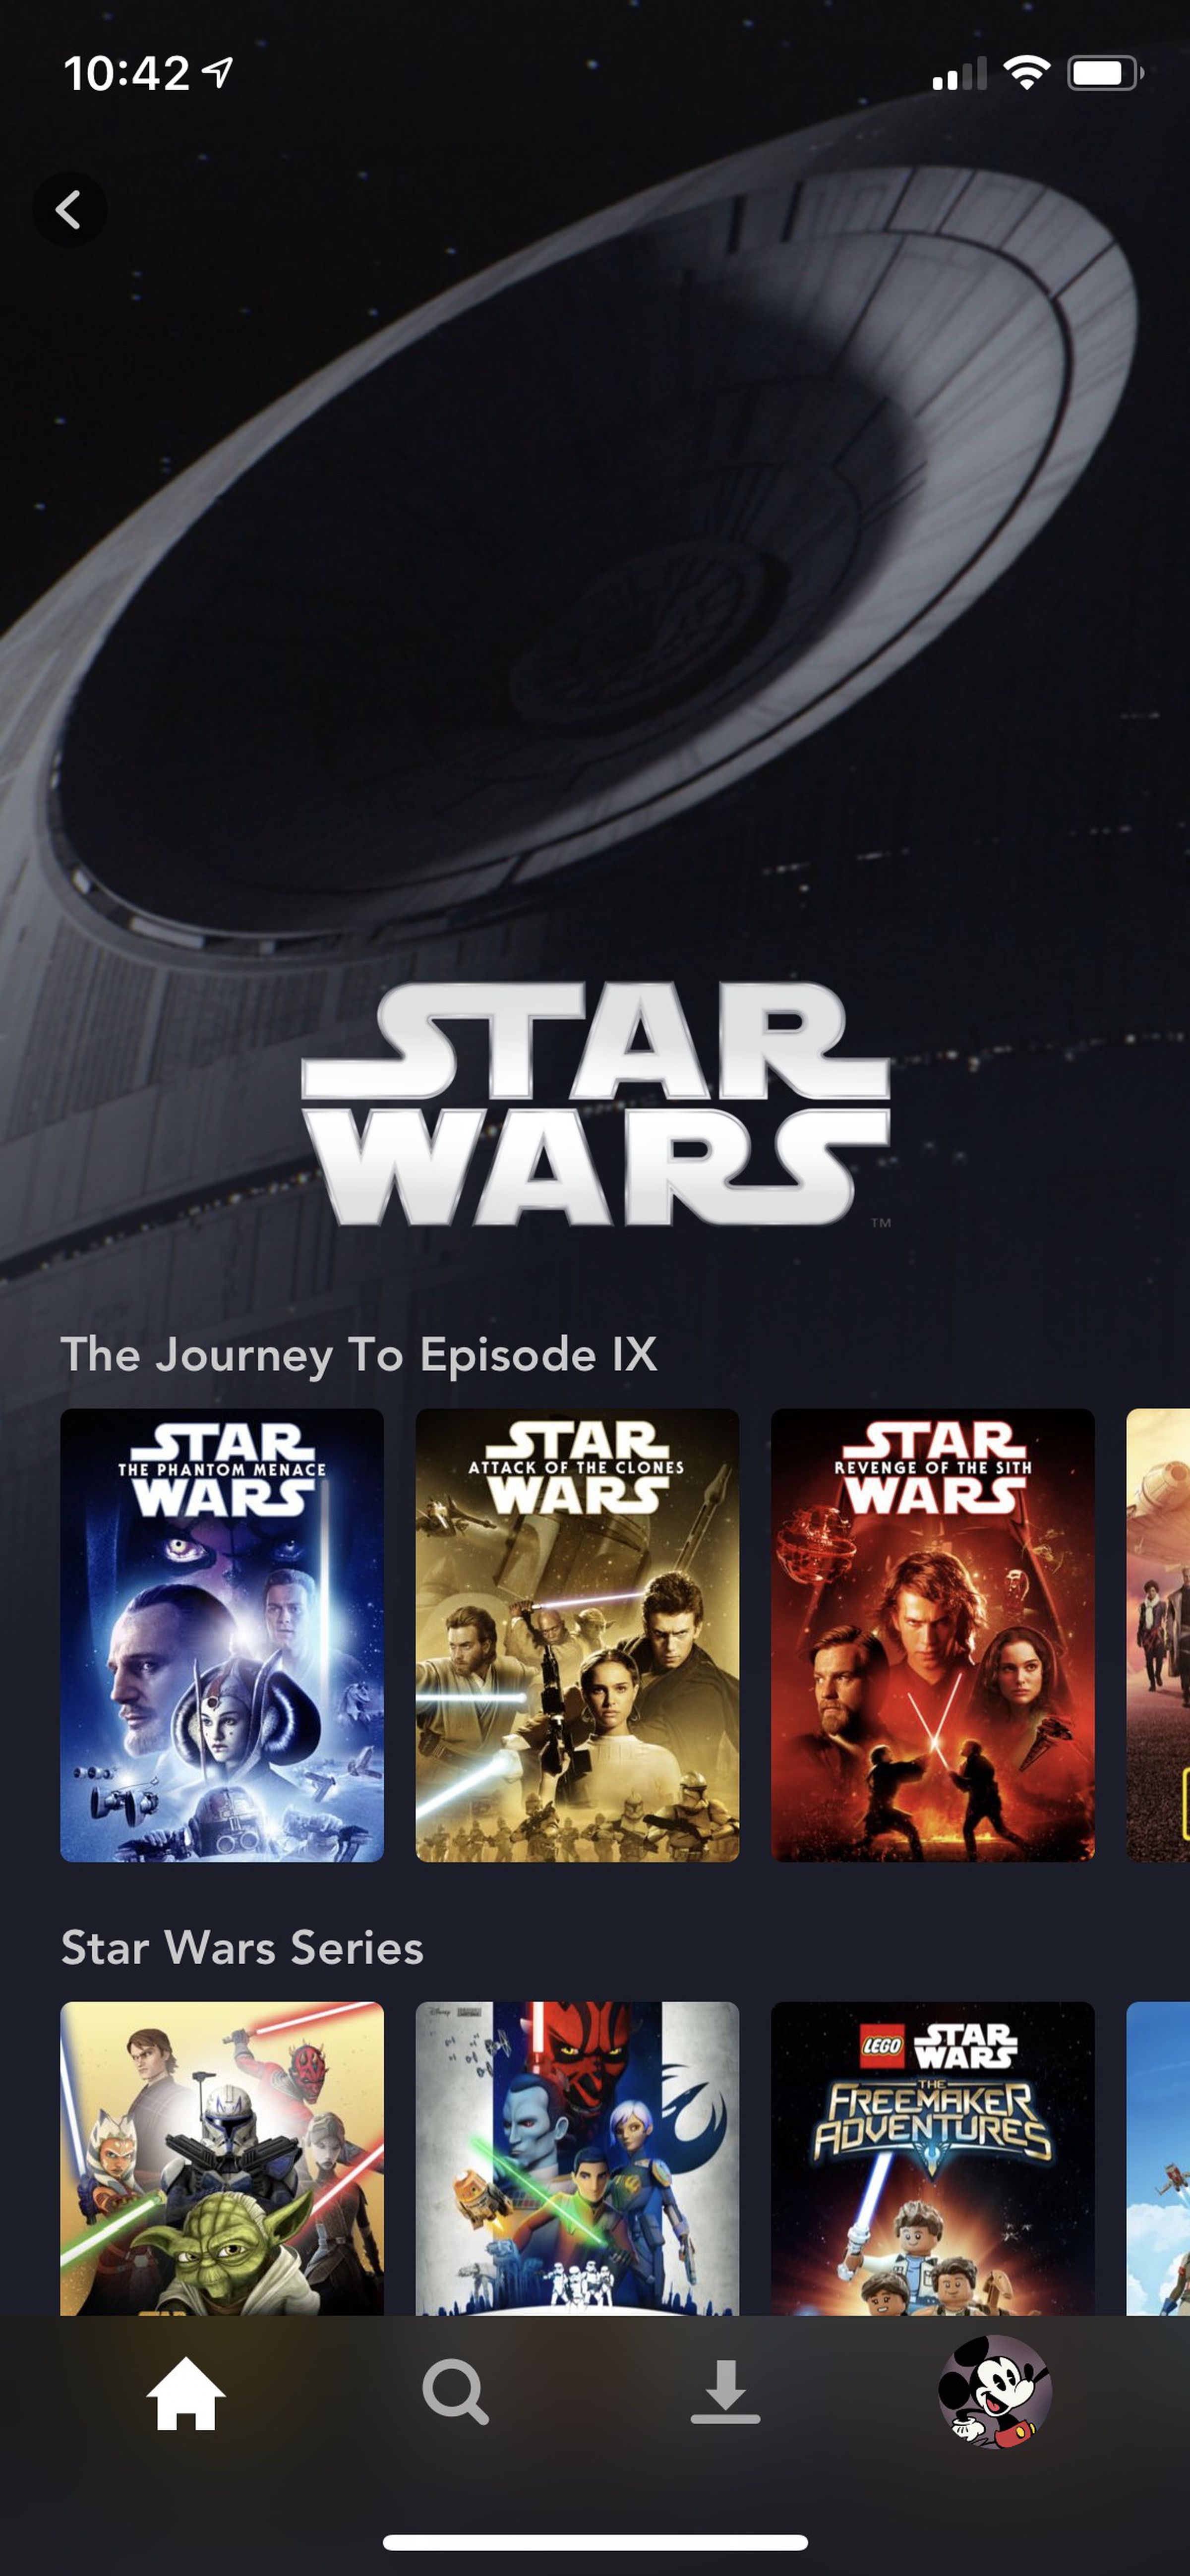 <em>The Star Wars page in the app.</em>